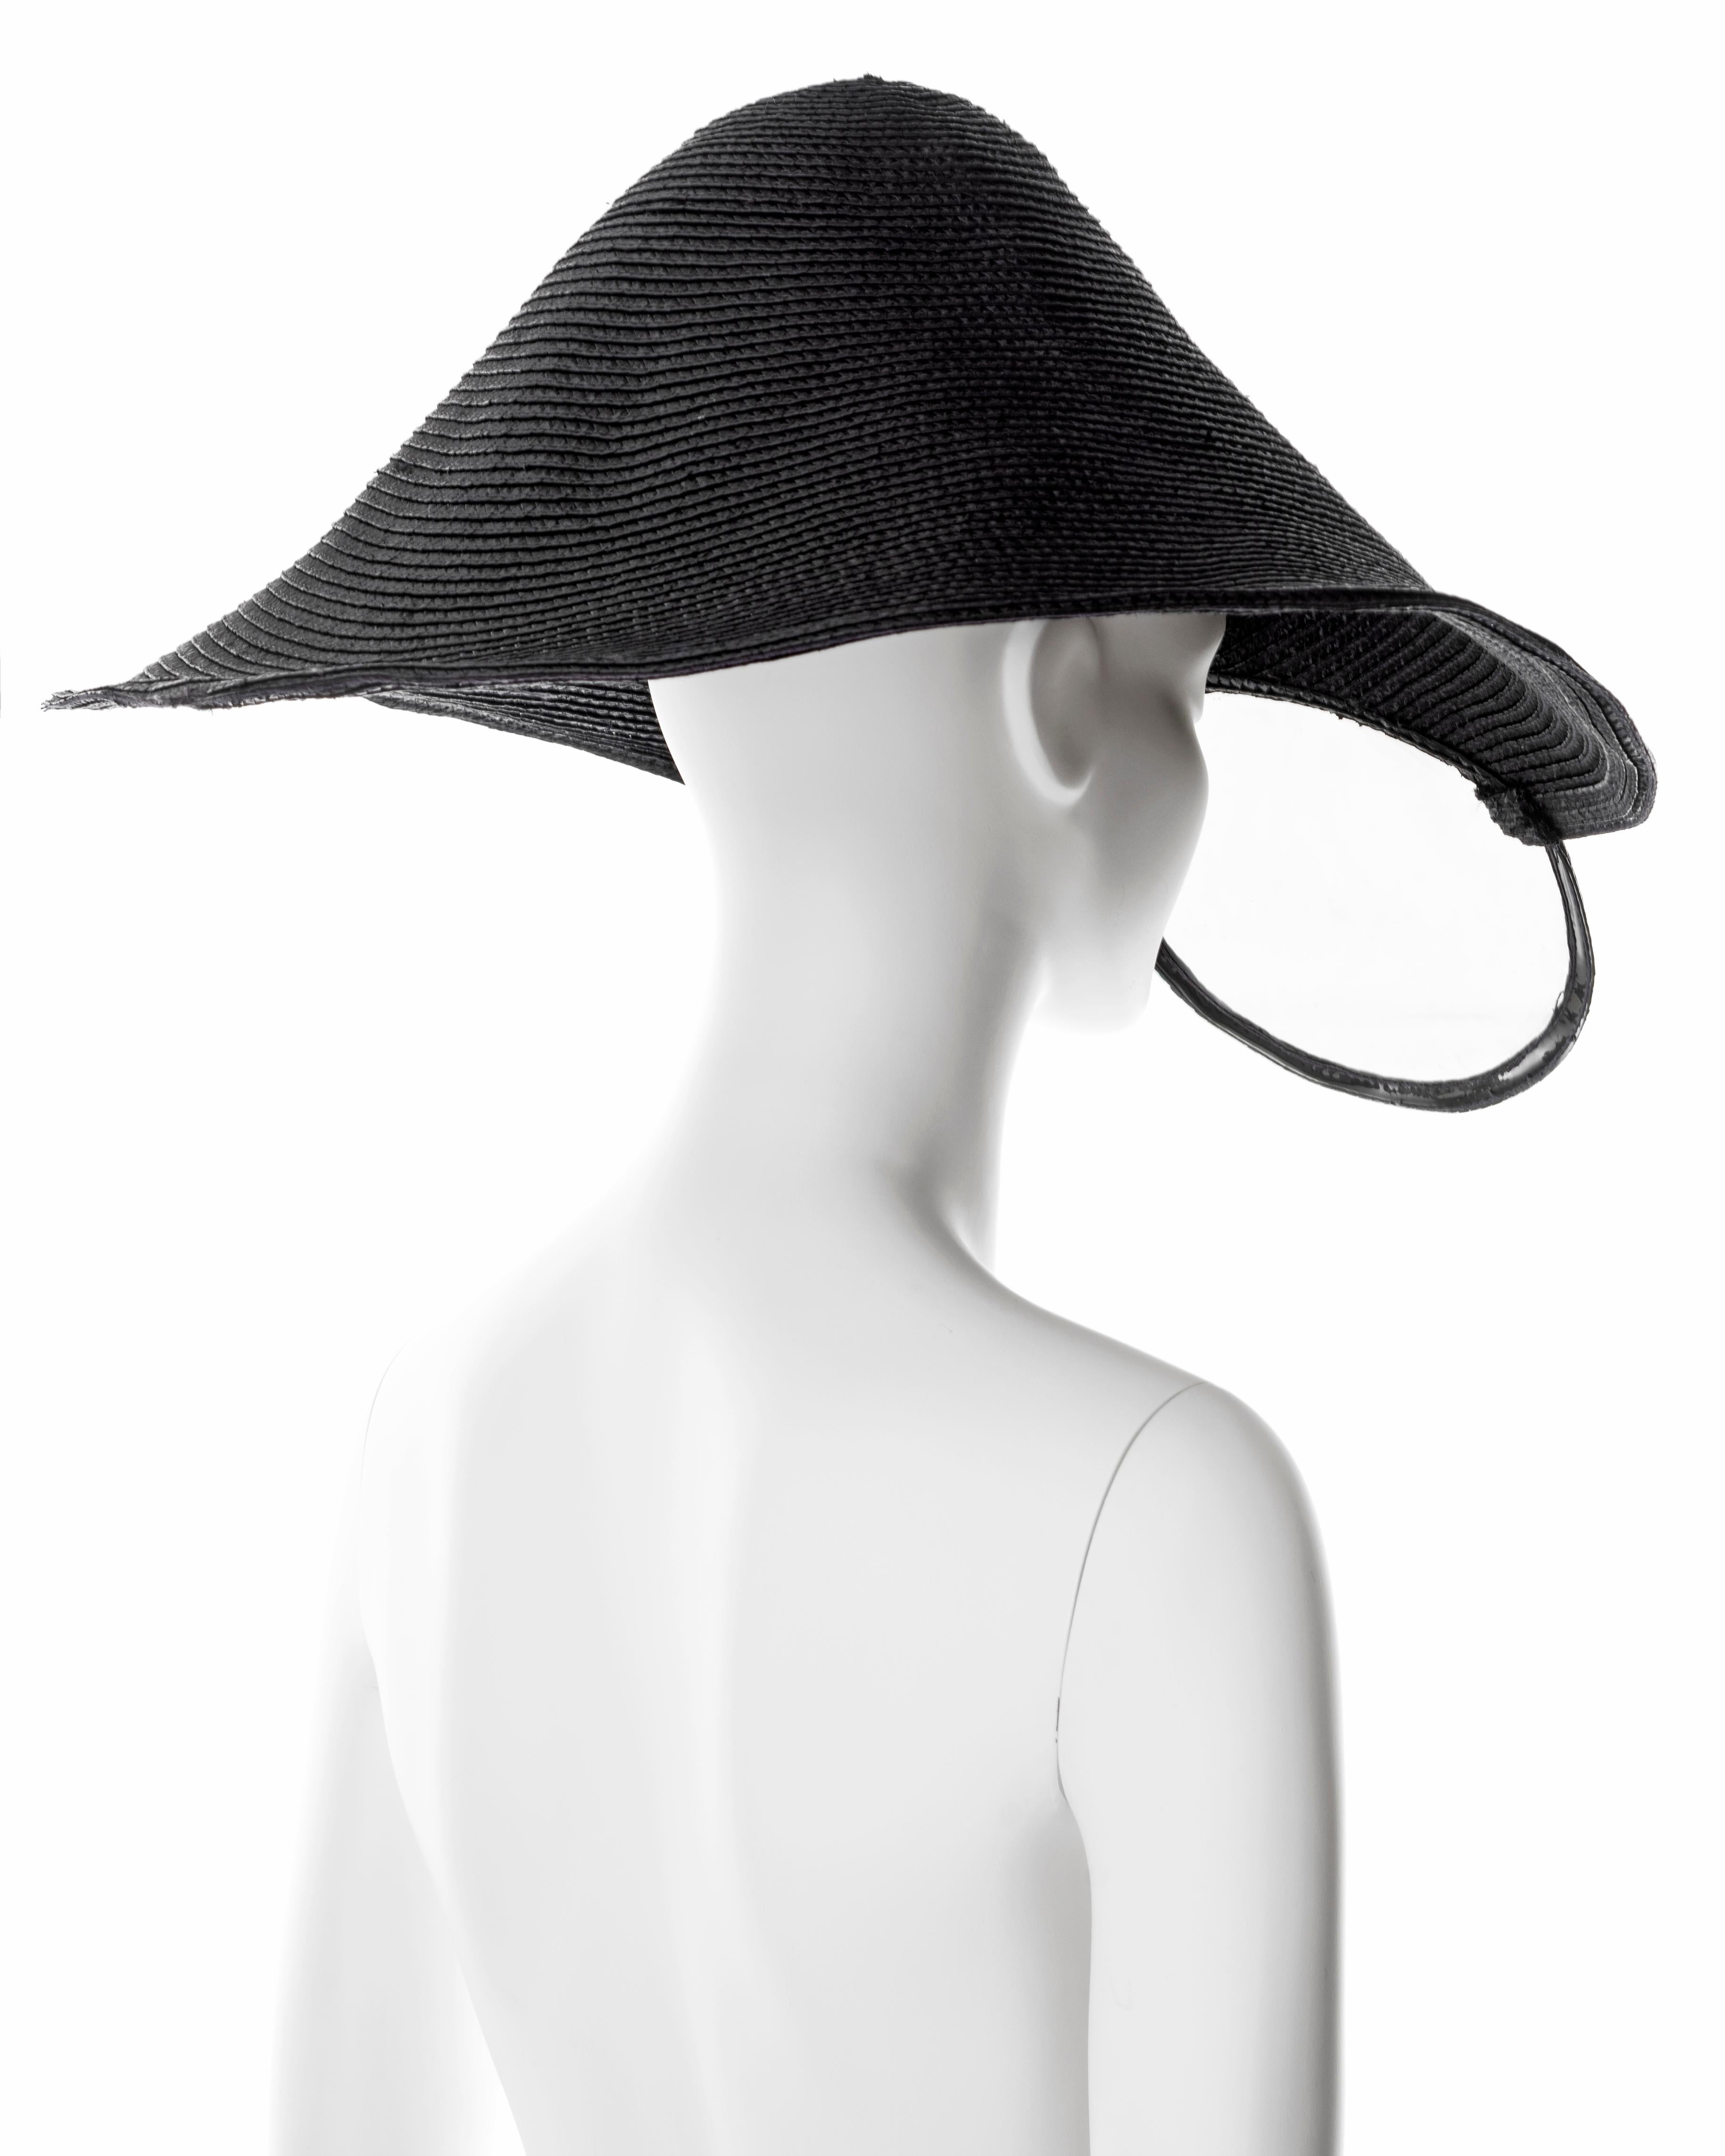 Paco Rabanne x Regis Haute Couture black straw hat with vinyl visor, ss 1994 5